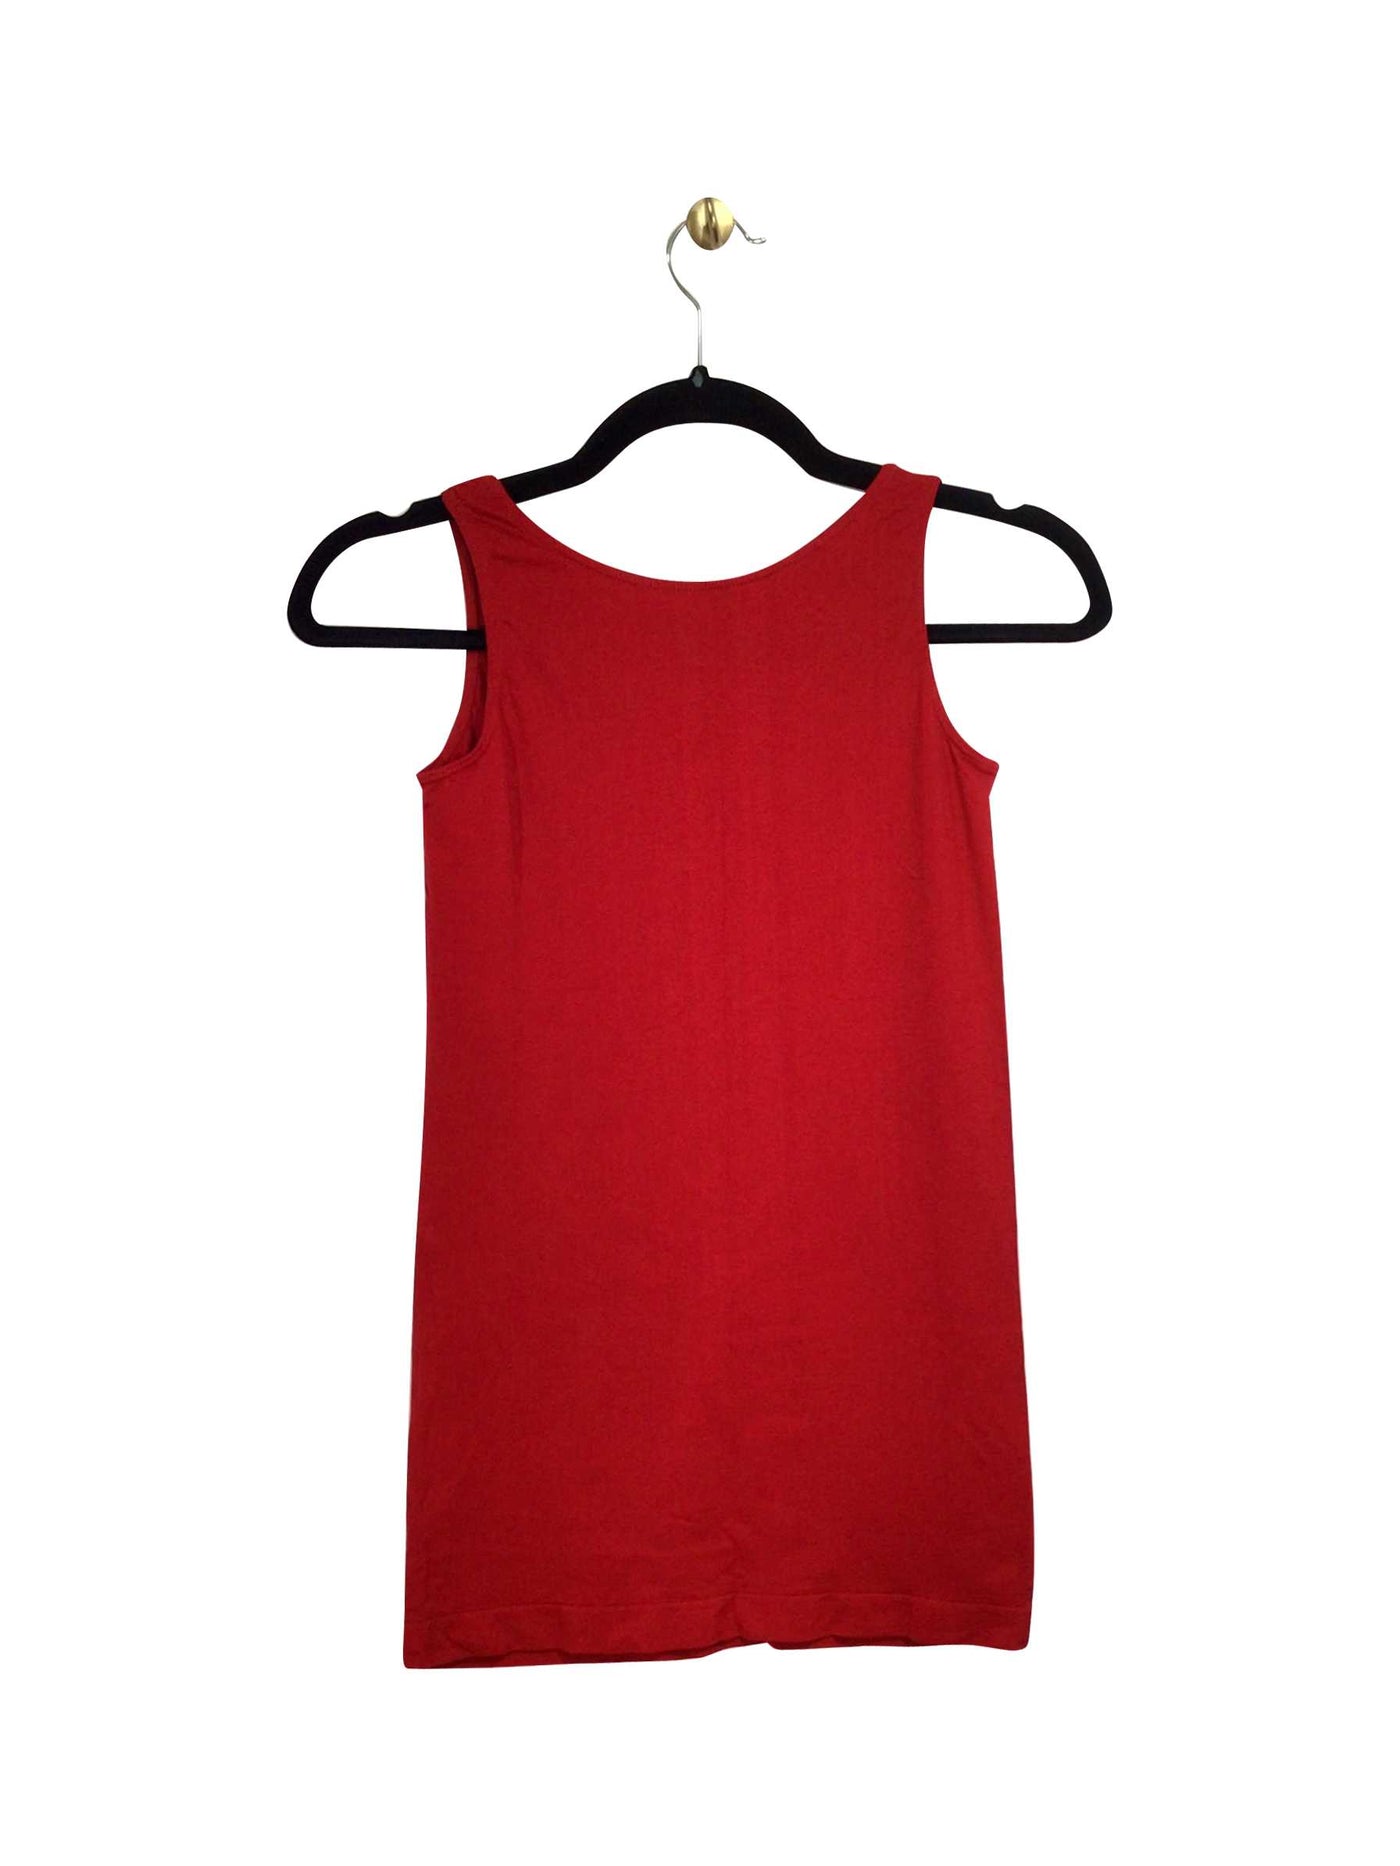 UNBRANDED Regular fit T-shirt in Red - Size XS | 8.99 $ KOOP